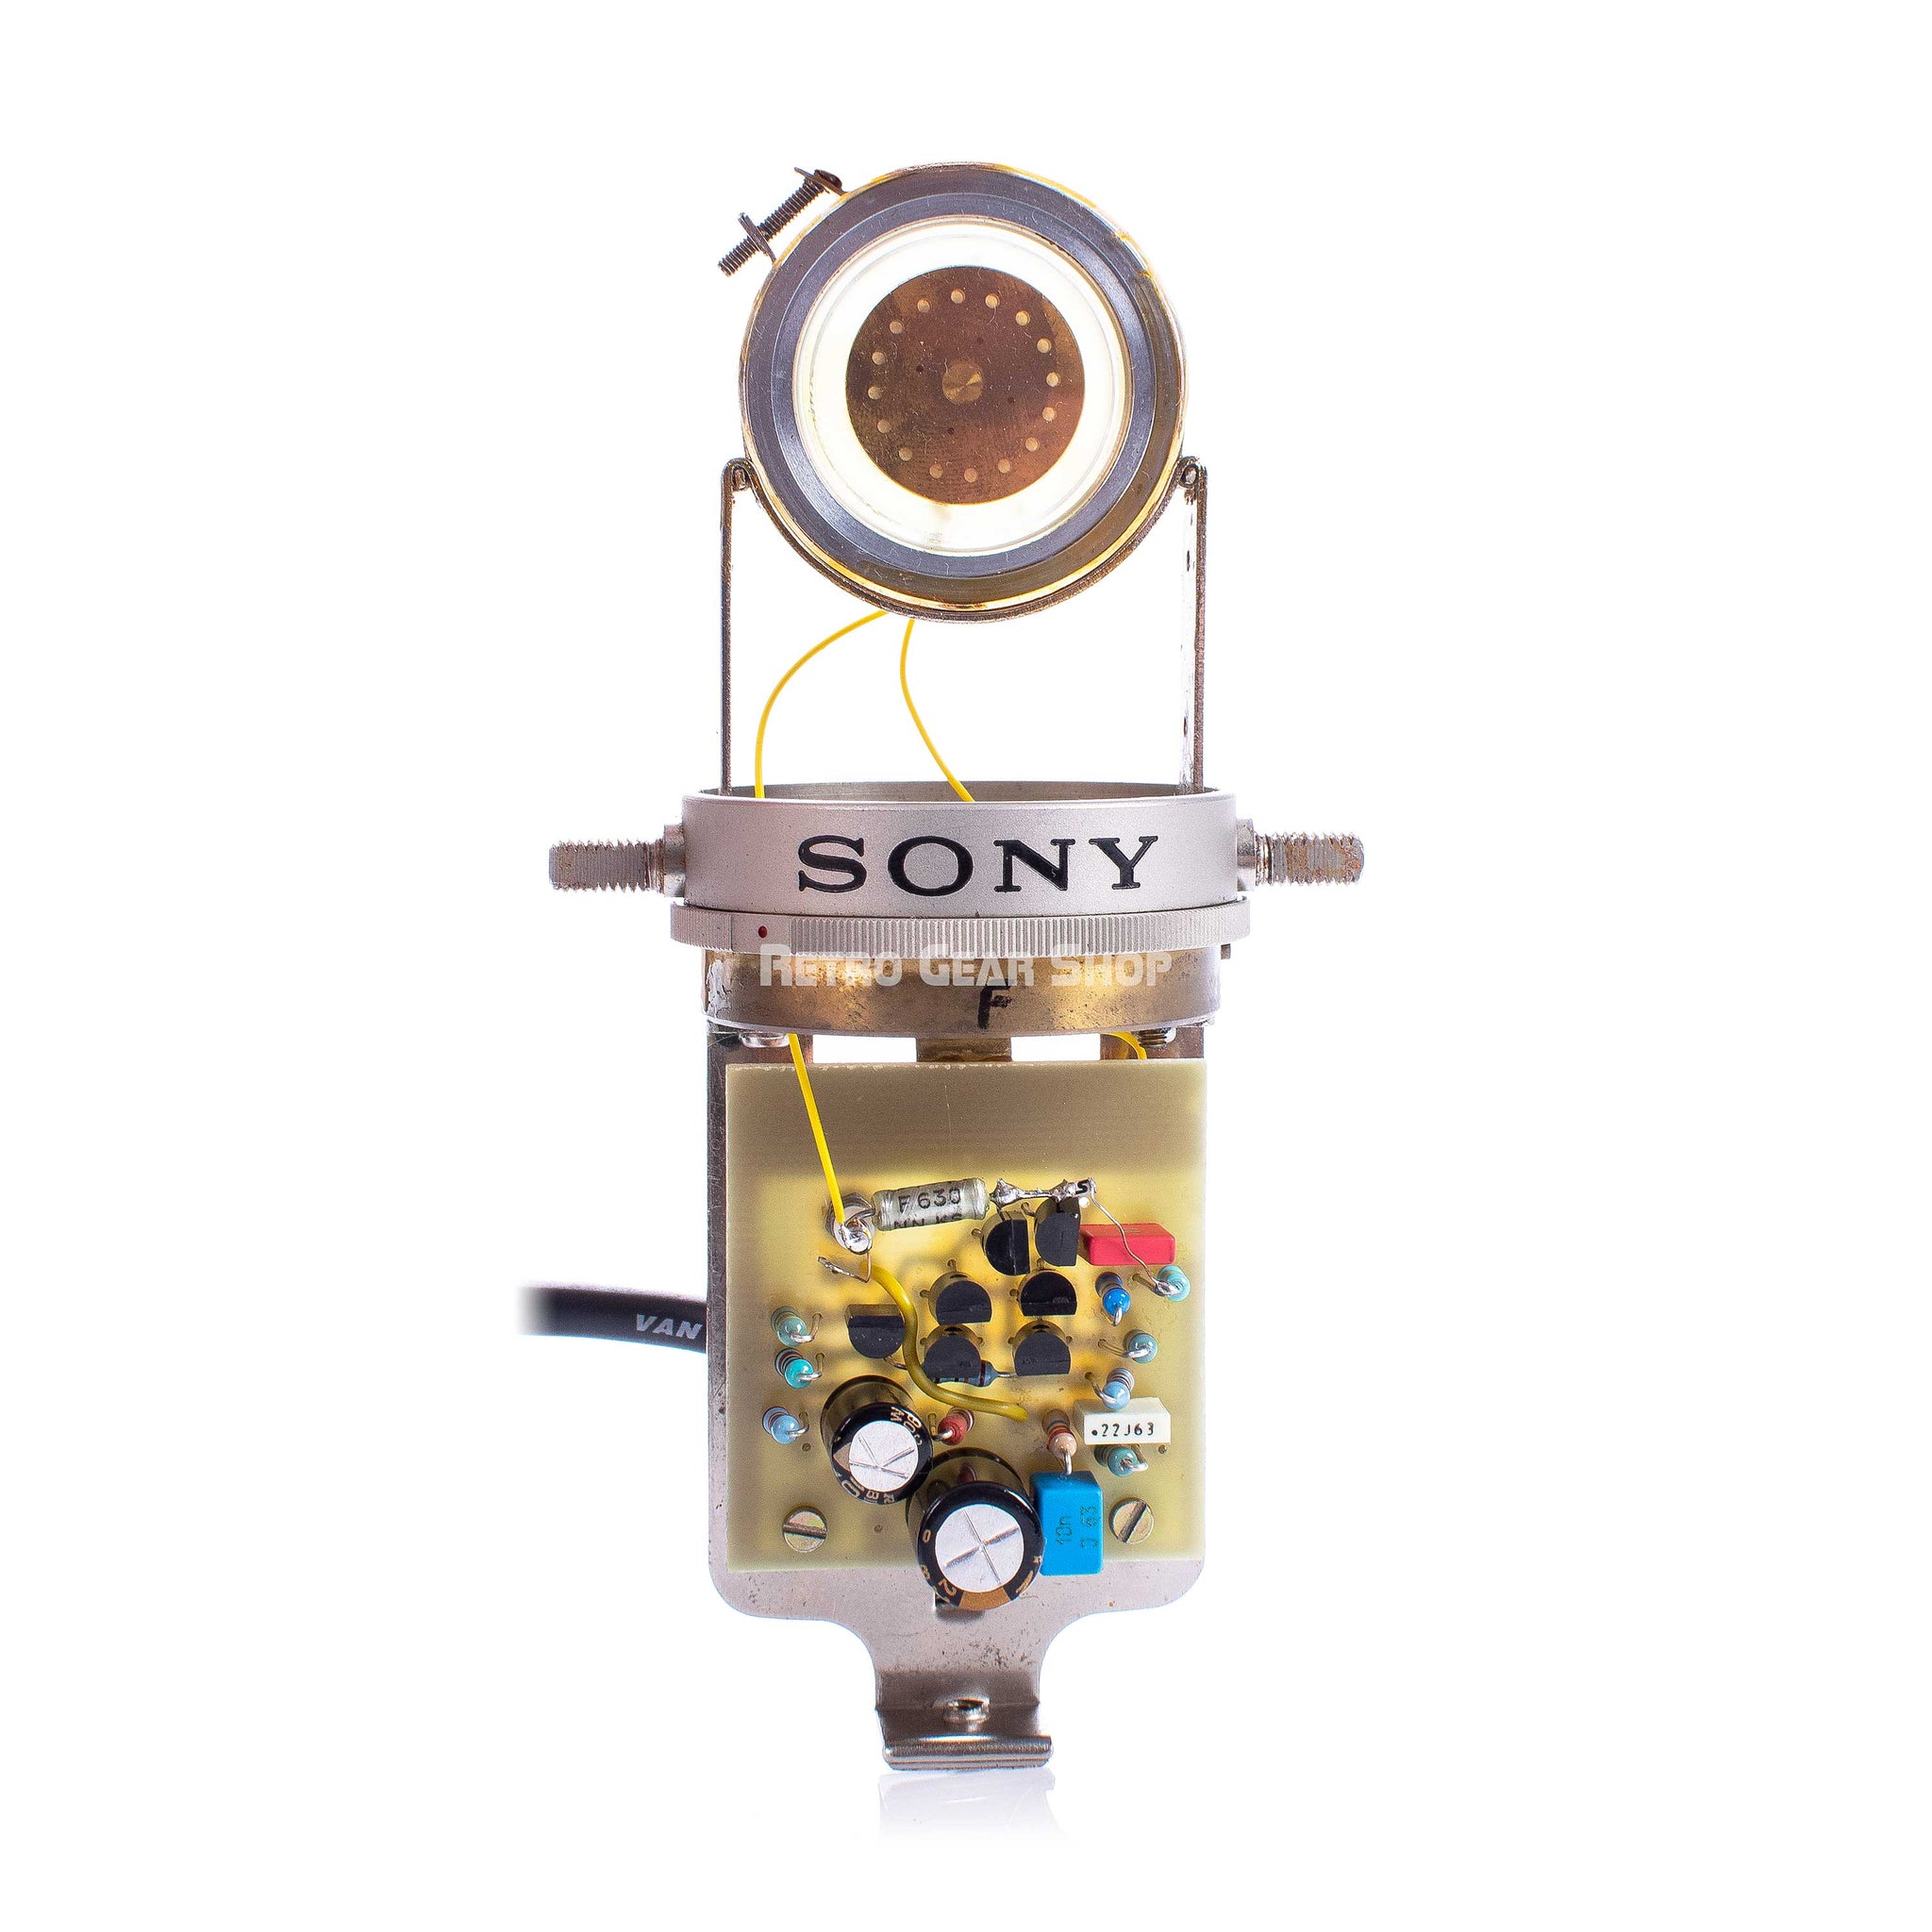 Sony C37 Condenser Microphone Vintage Rare Rens Heijnis Modded Internals Electronics Front